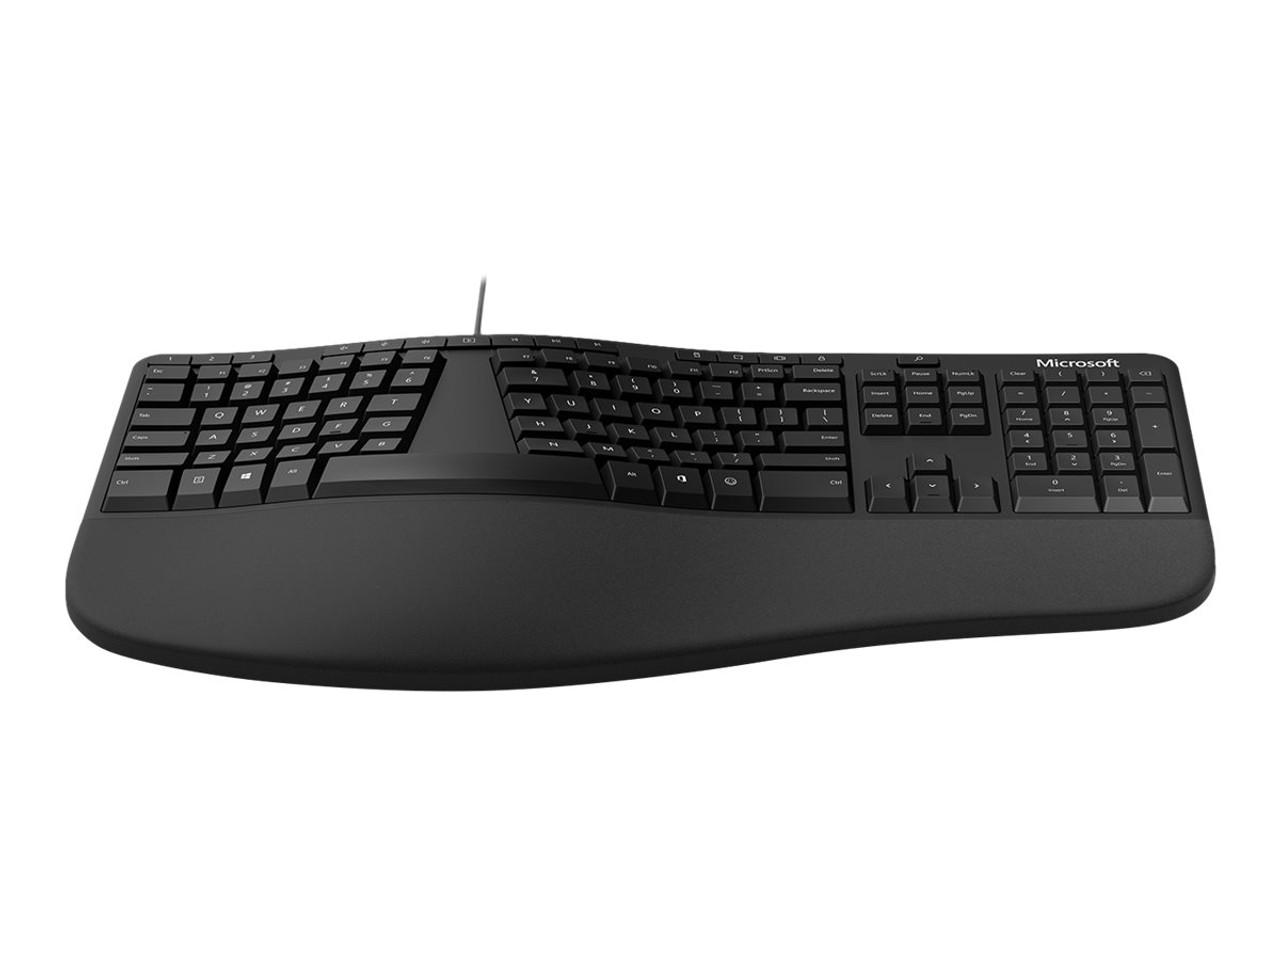 Microsoft Ergonomic Keyboard Keyboard Black Lxm